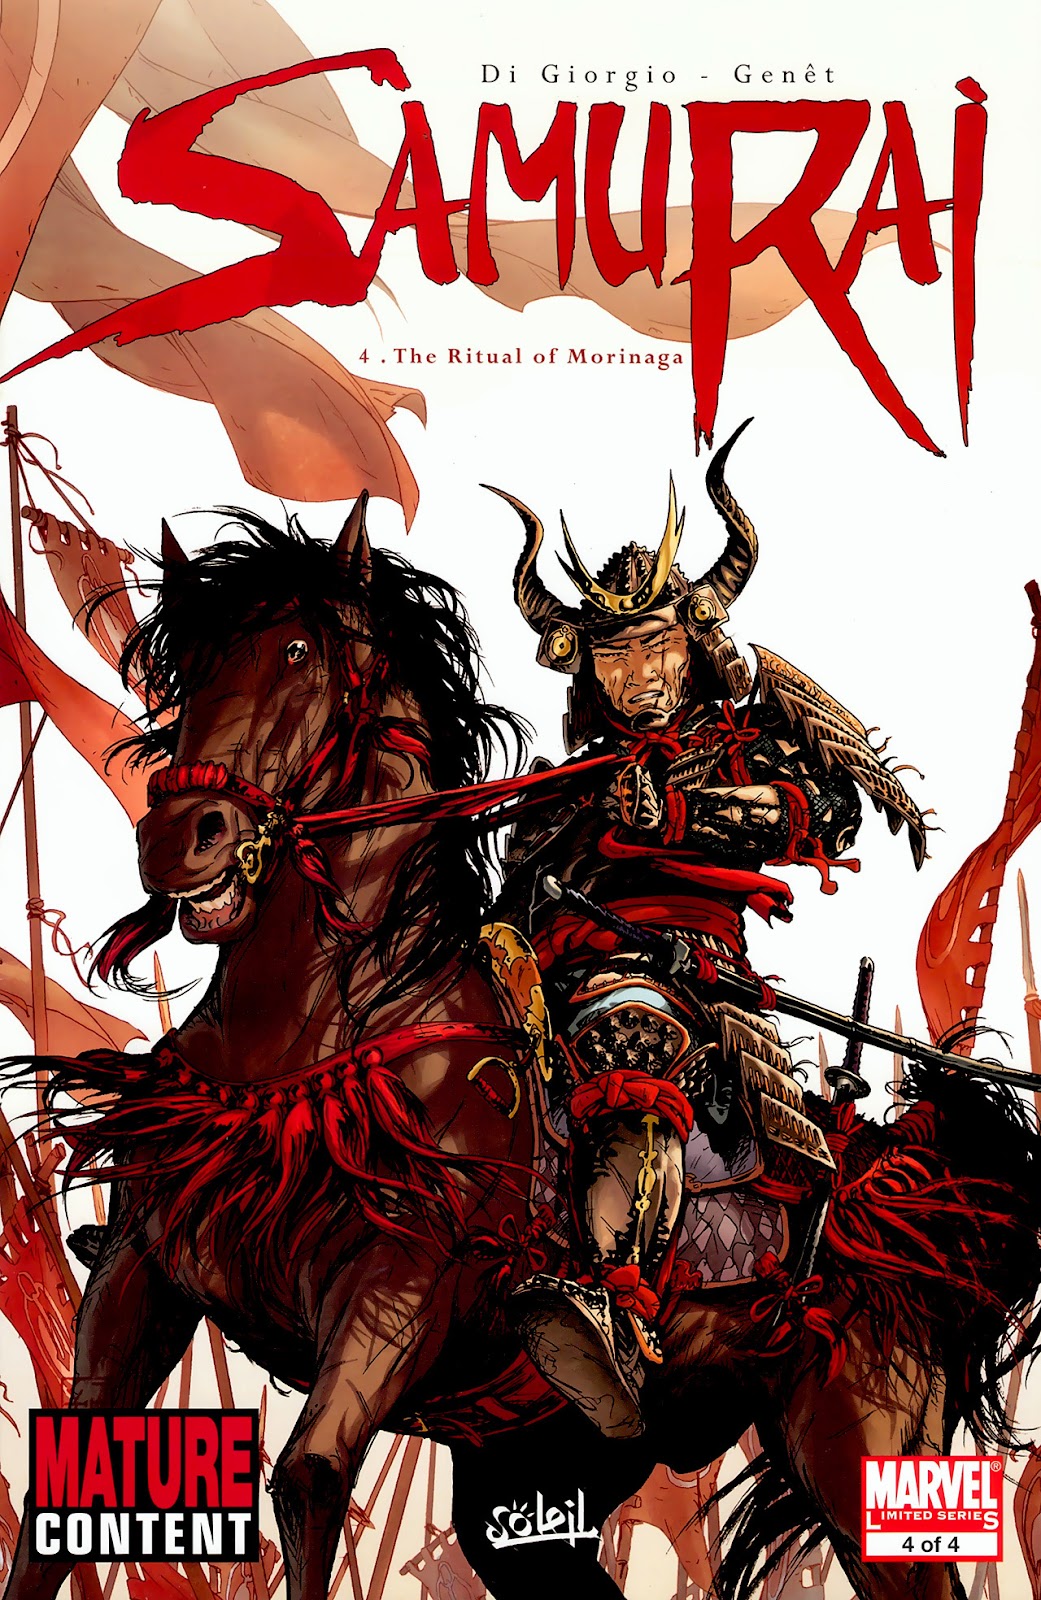 Samurai: Legend issue 4 - Page 1